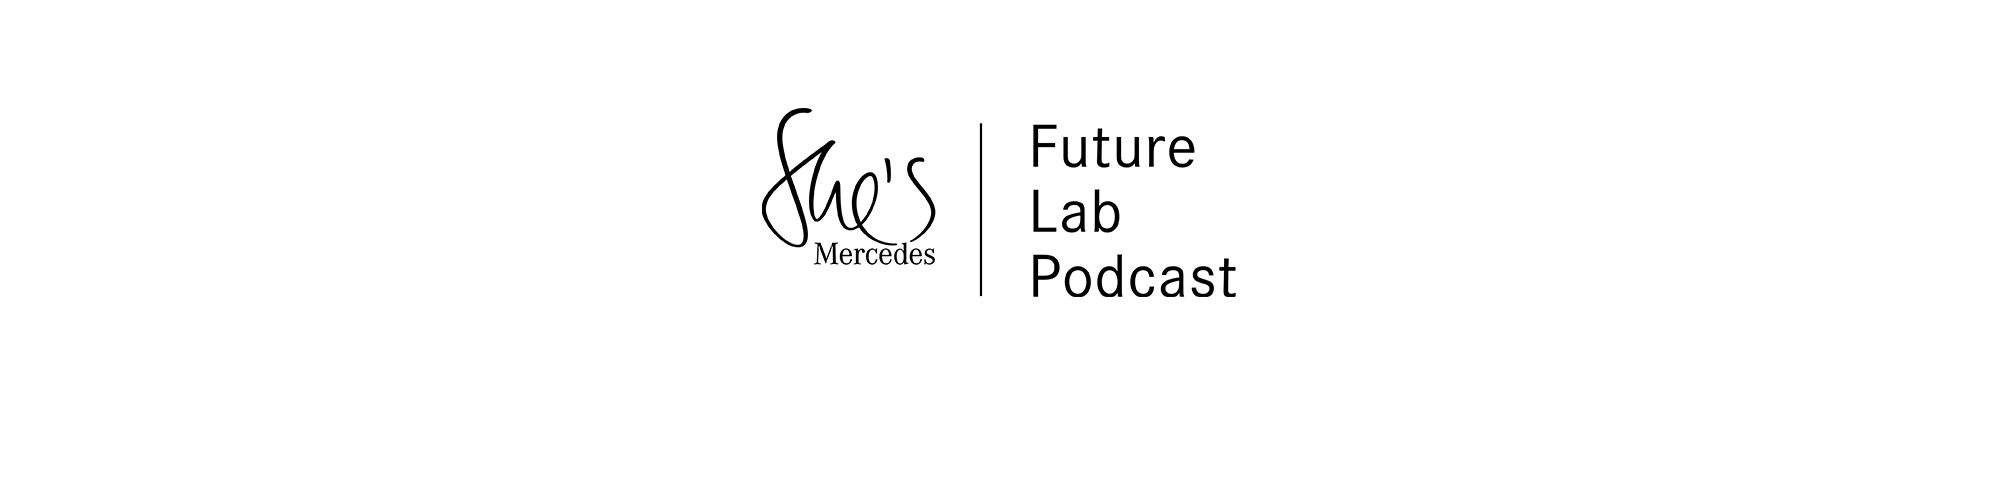 She’s Mercedes Future Lab Podcast